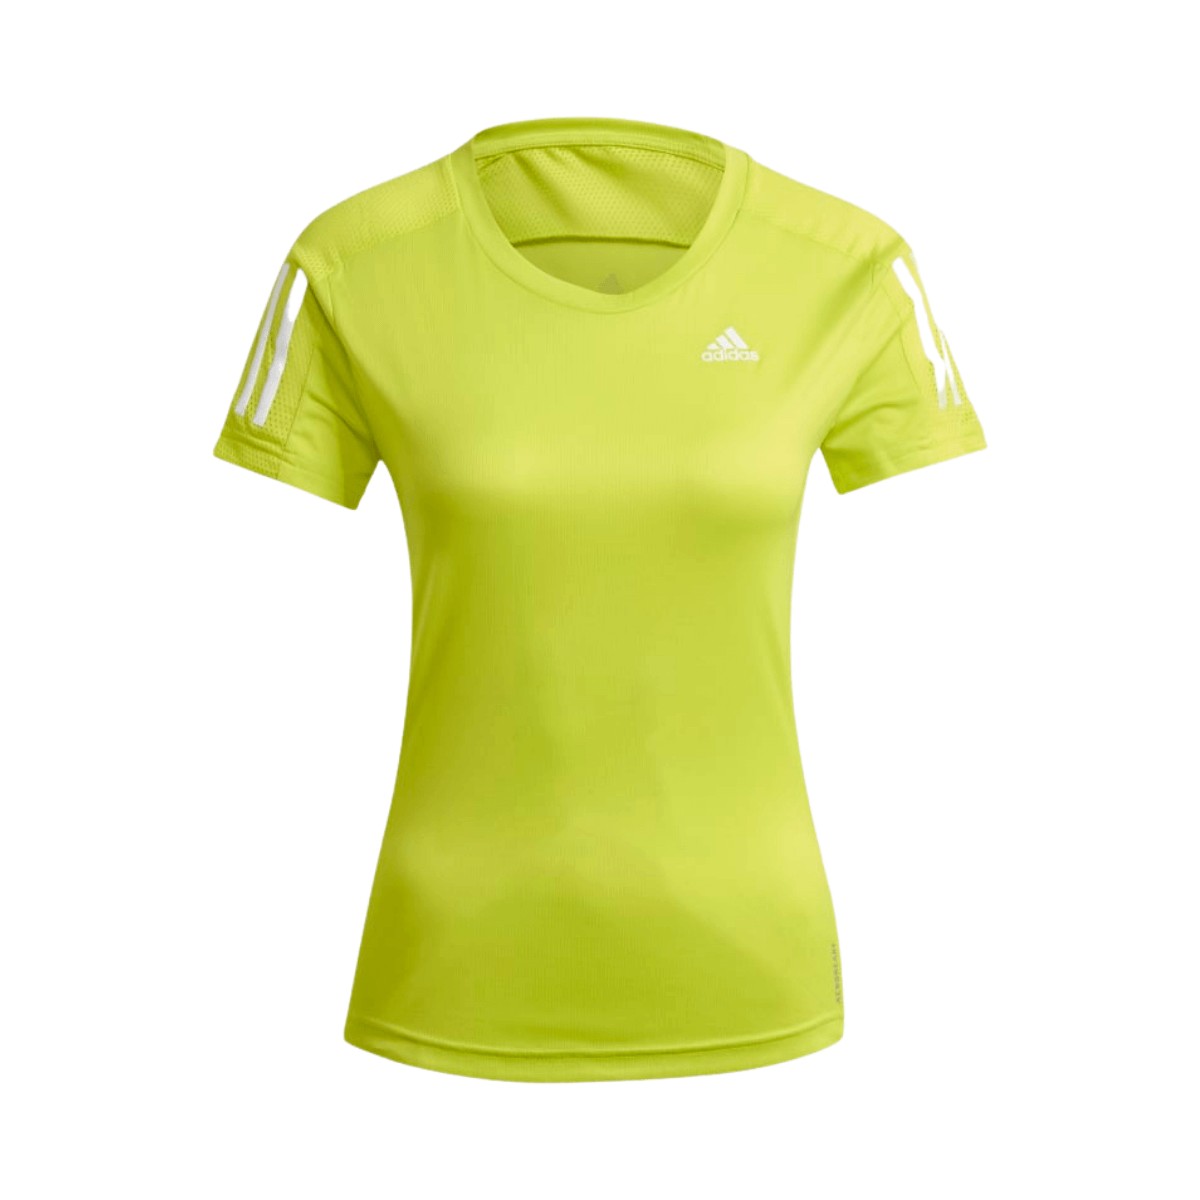 Adidas Own The Run Yellow Woman T-Shirt